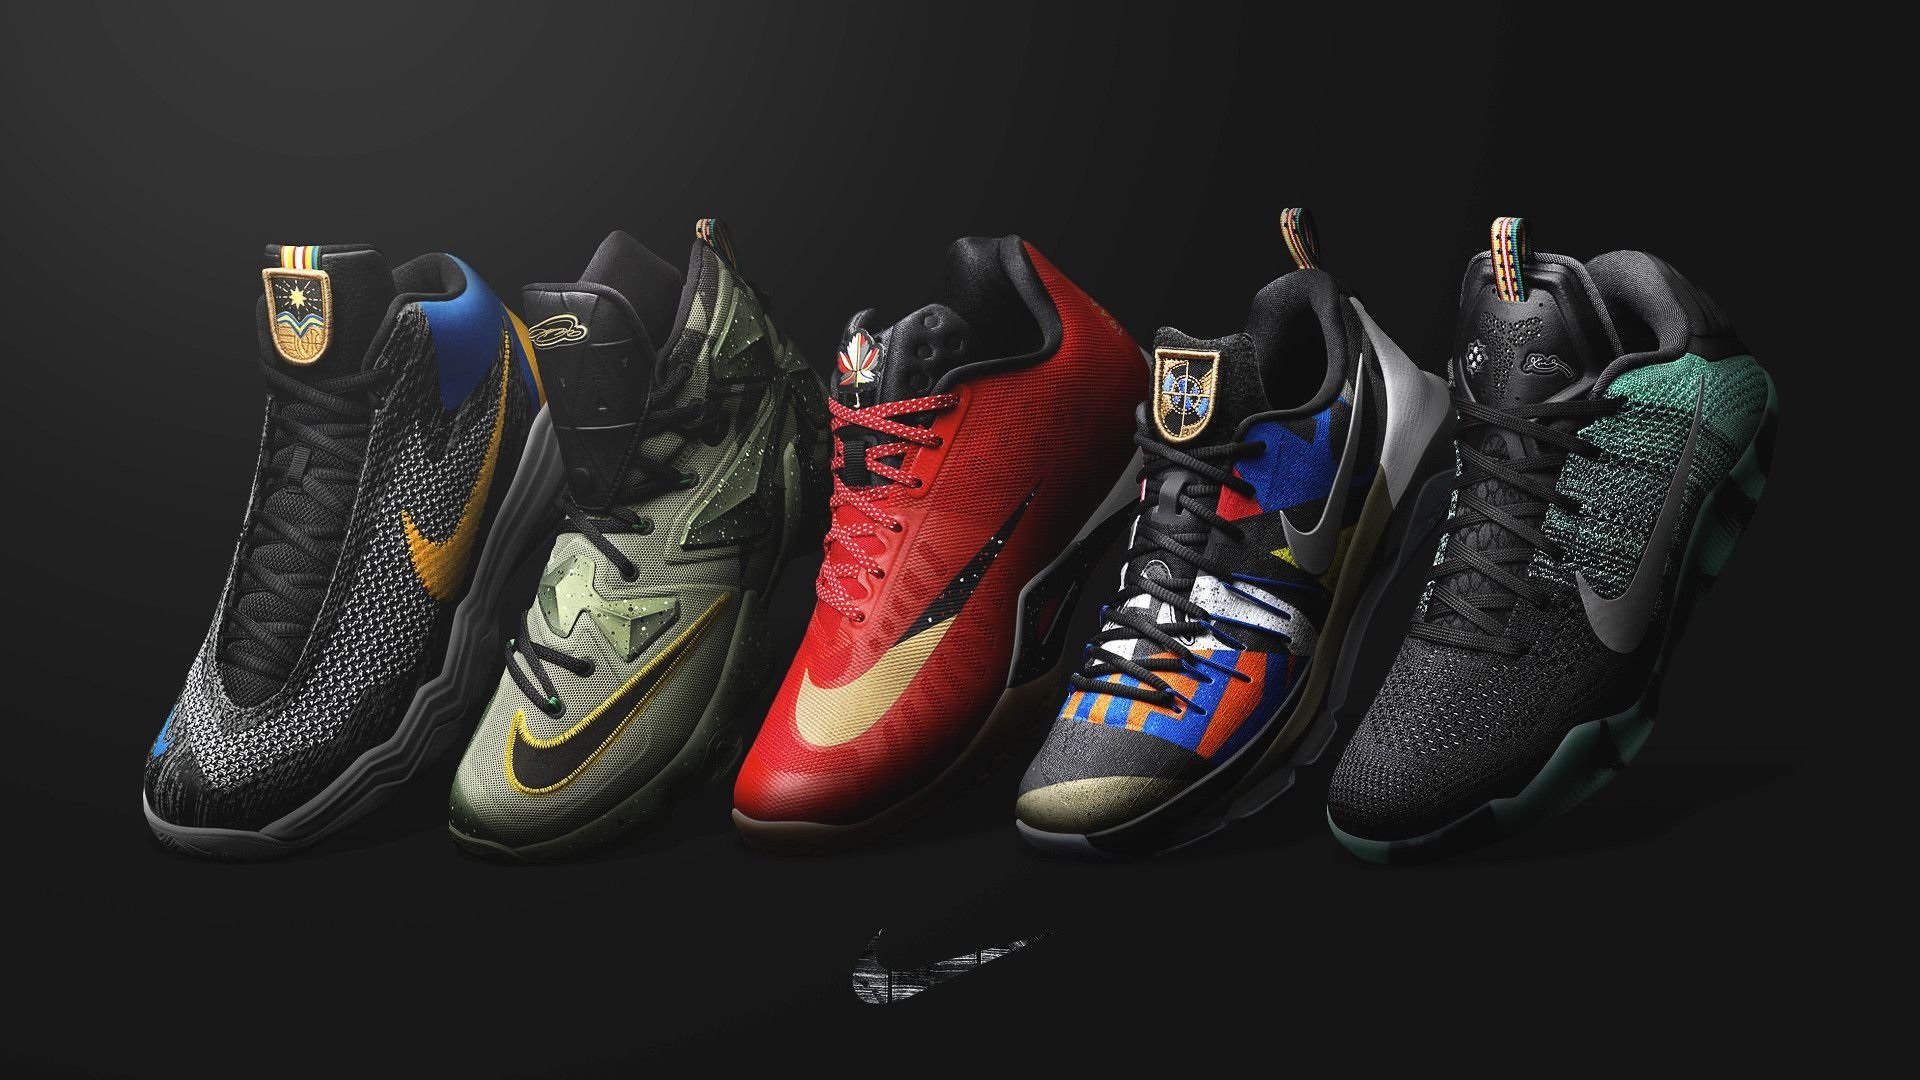 Nike Basketball Shoes Wallpaper 67 images